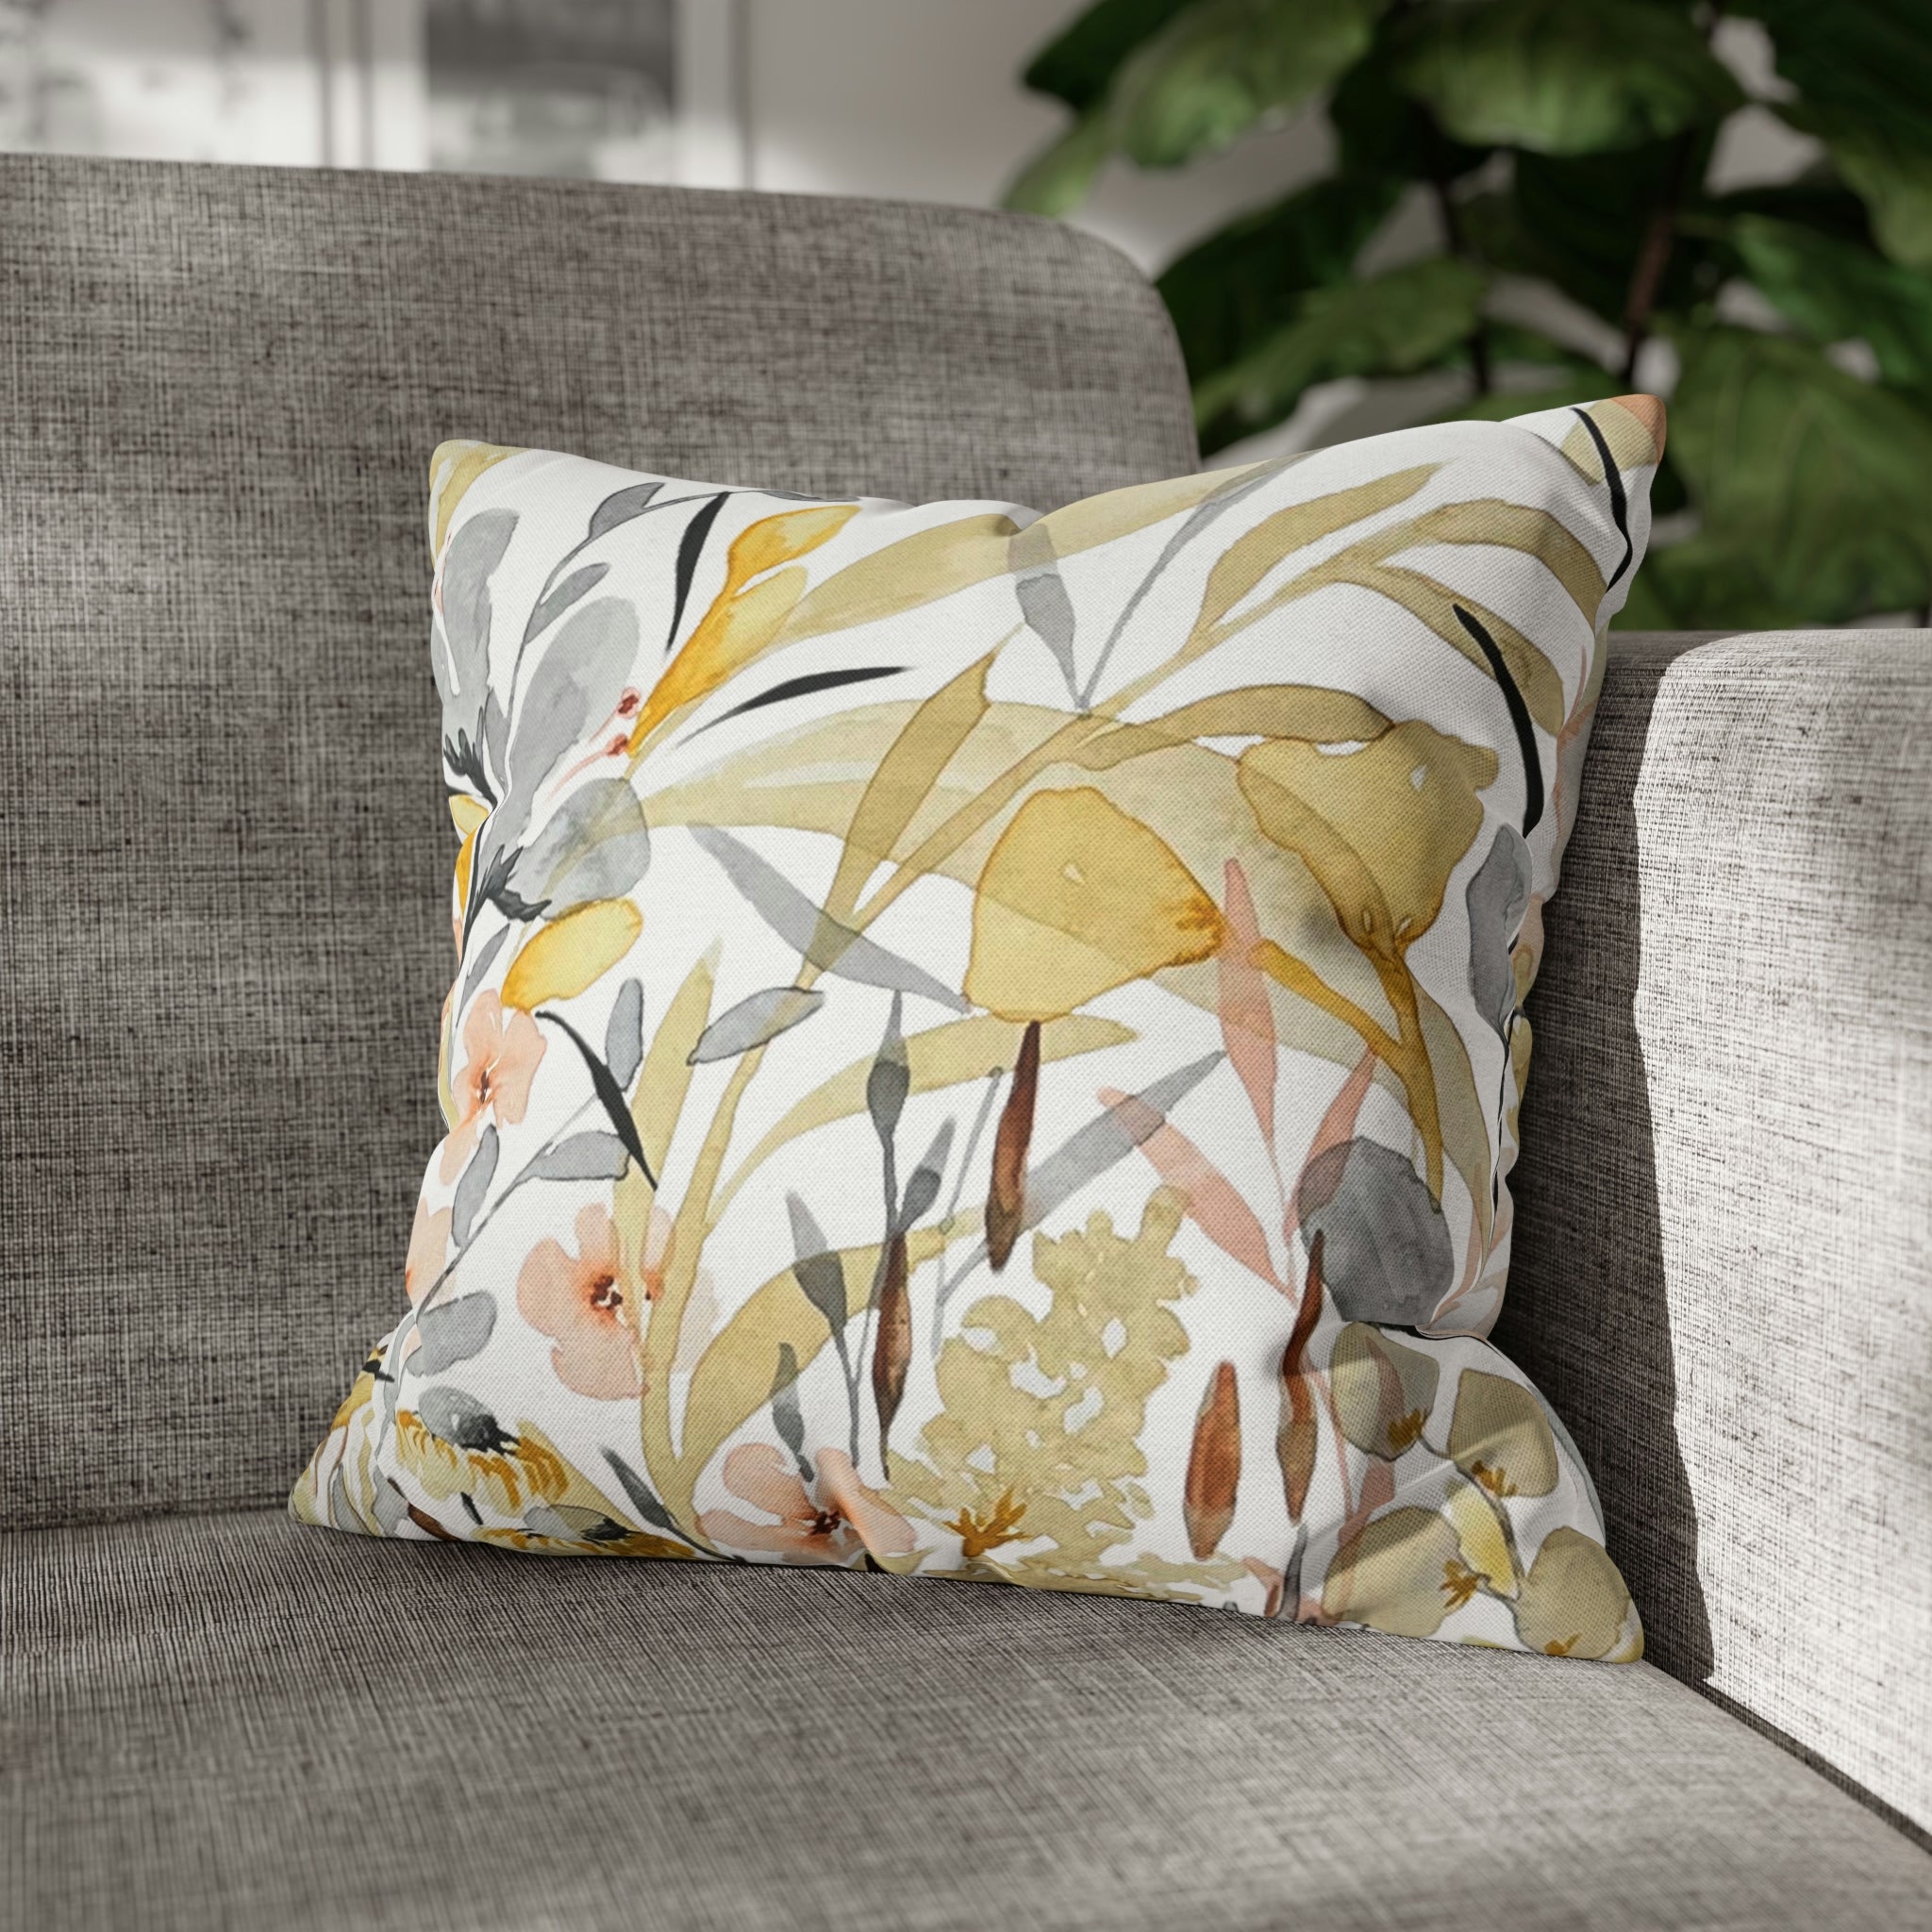 Soflora Botanical Garden Print on Throw Pillow Cover